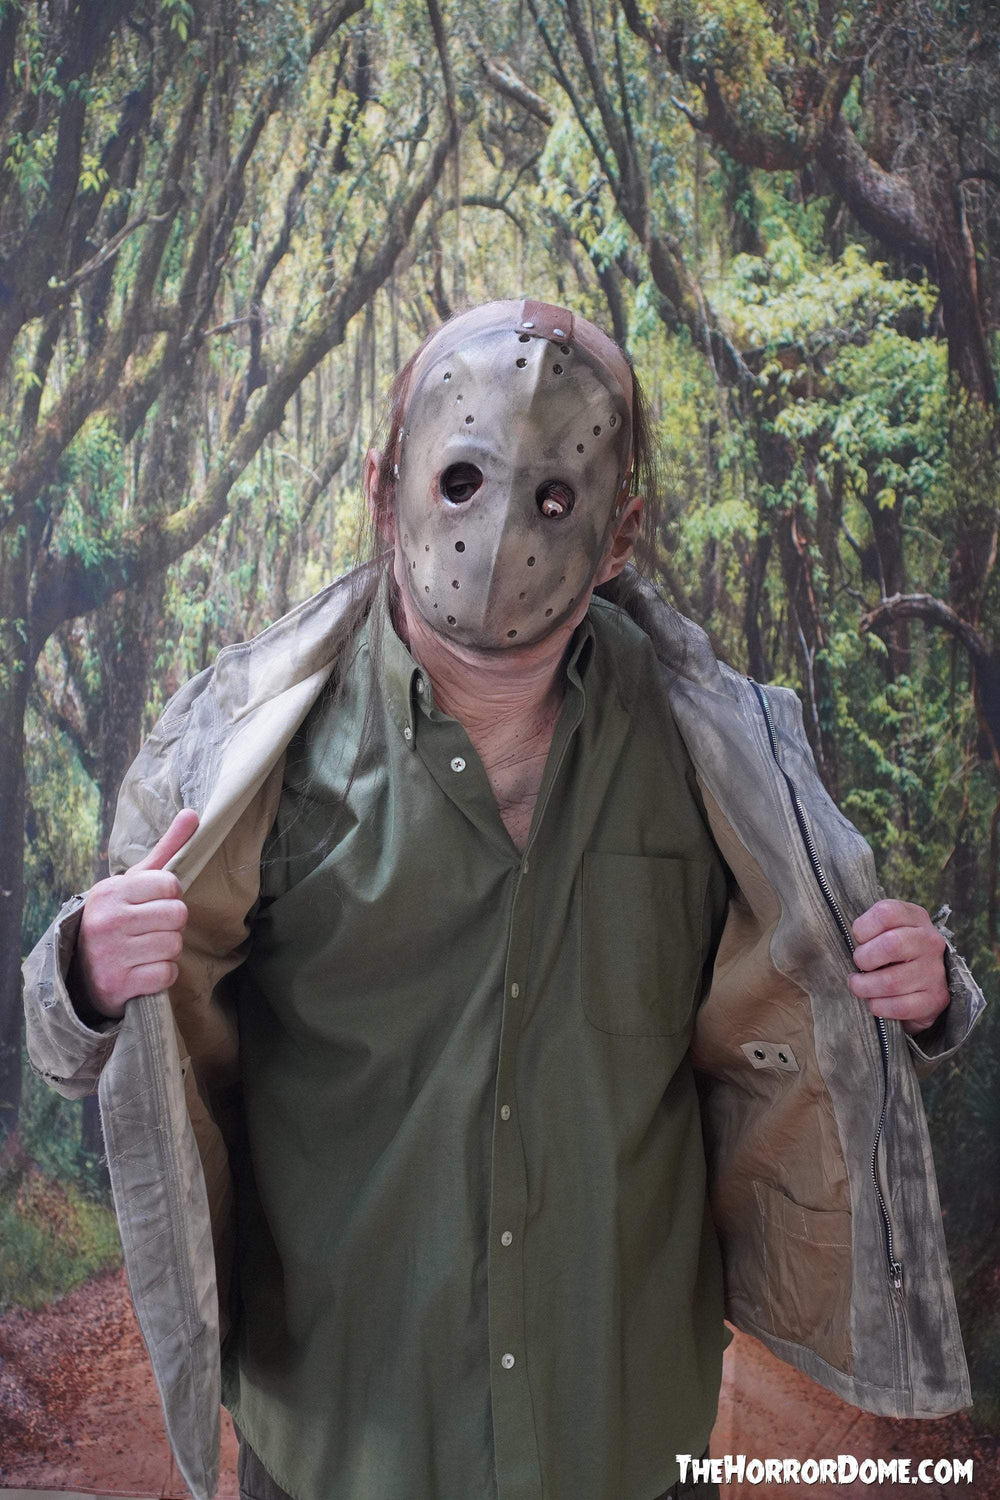 Movie Quality "Camp Killer" Jacket Halloween Costume